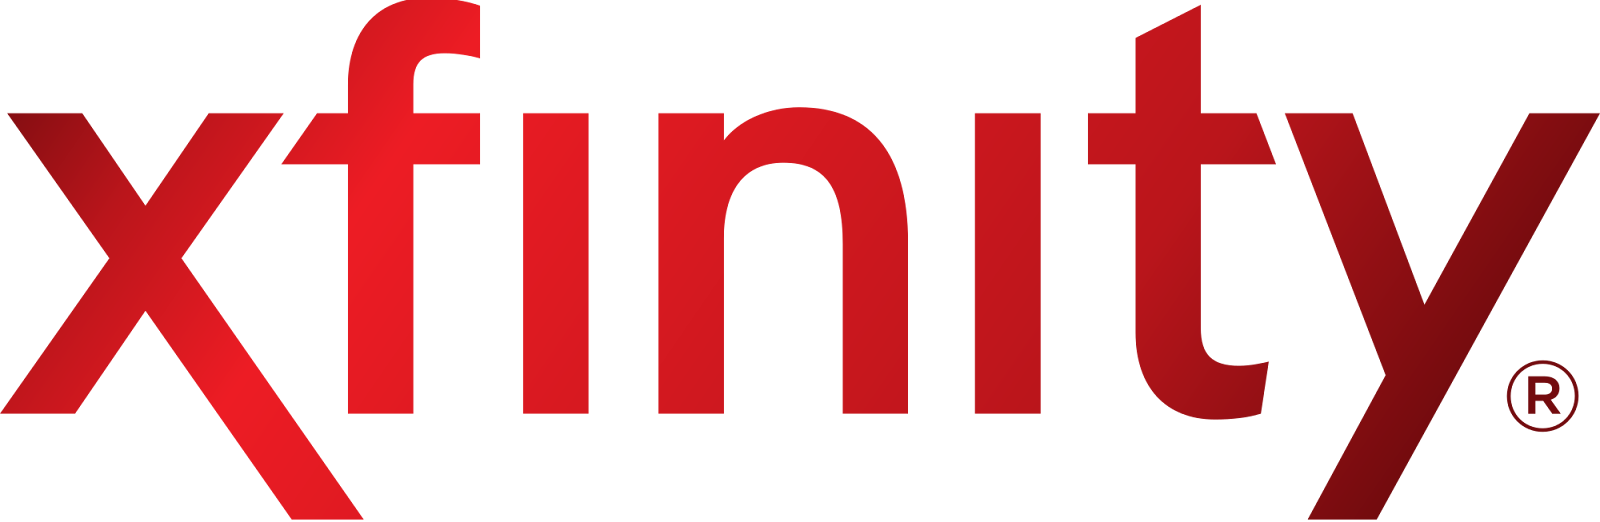 Xfinity_logo.svg.png